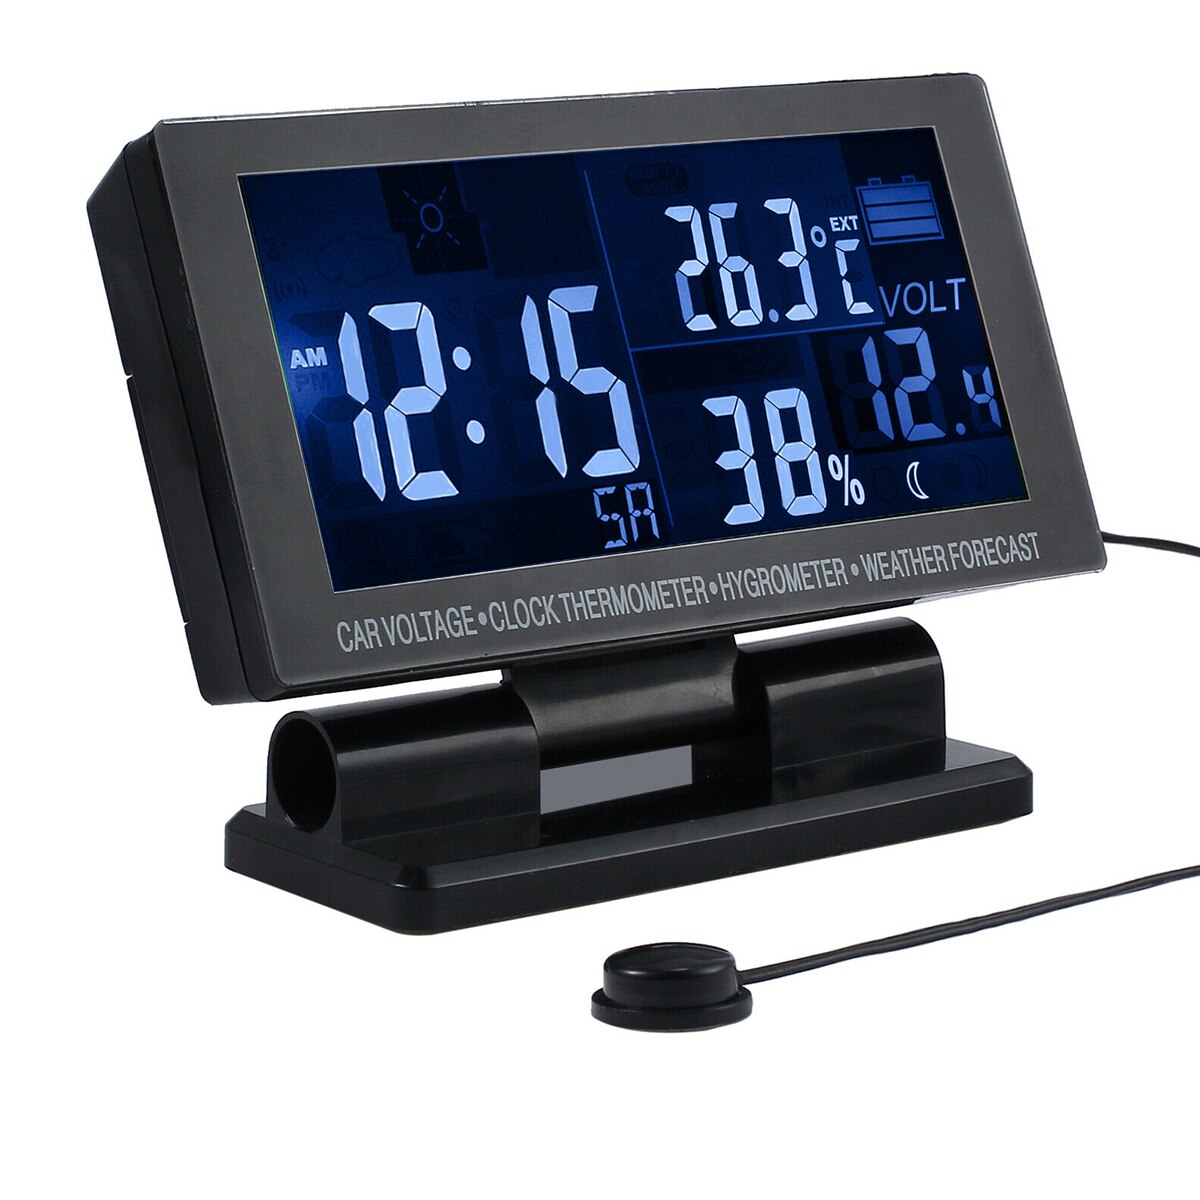 5-In-1 Lcd Digitale Auto Klok Thermometer Hygrometer Weersverwachting Voltmeter Universele Voor 12V En 24V Voertuigen